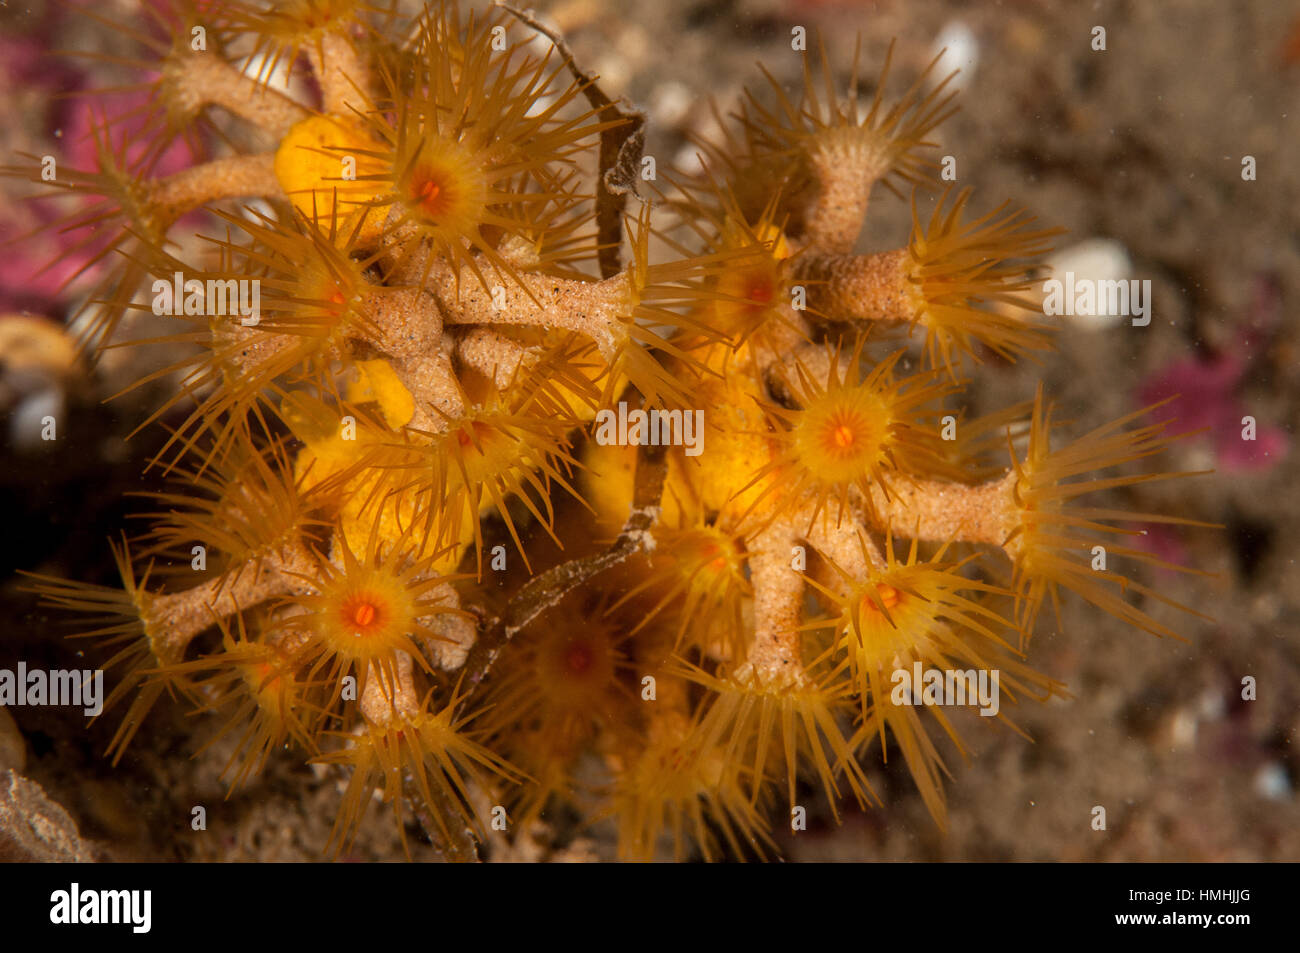 gelbe Cluster Anemone (Parazoanthus Axinellae), L'escala, Costa Brava, Katalonien, Spanien Stockfoto